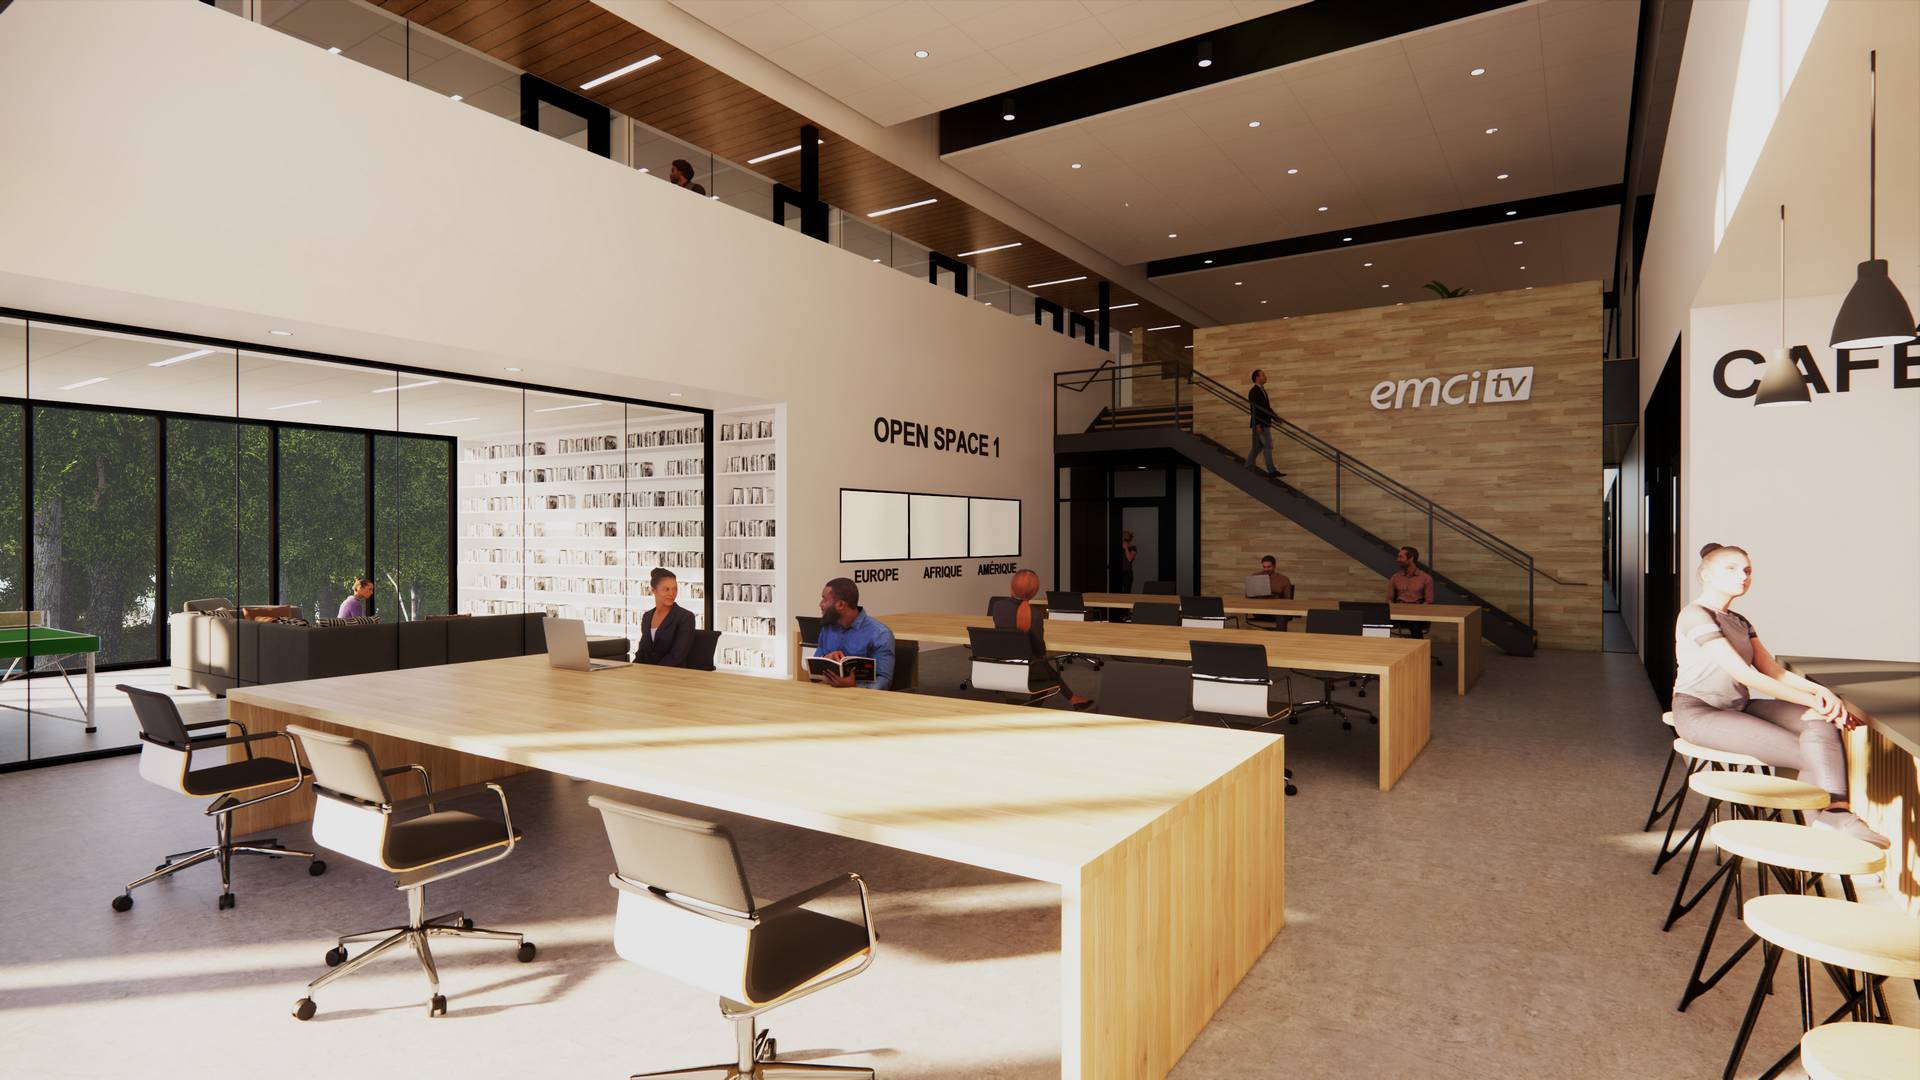 Construcion commerciale EMCI TV open space 1